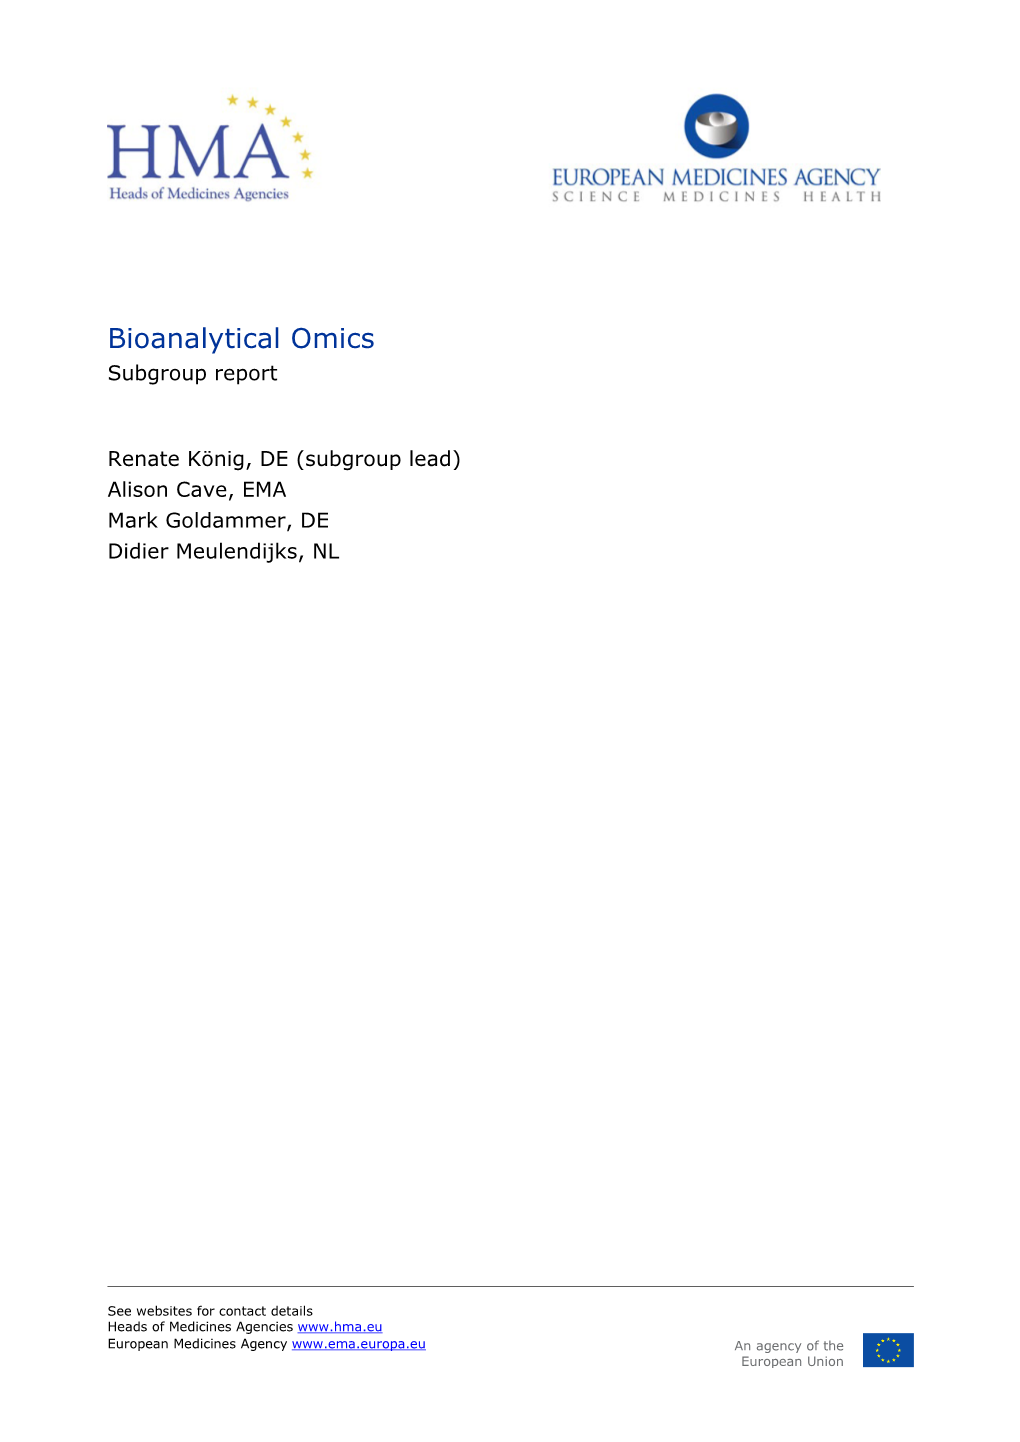 Bioanalytical Omics Subgroup Report